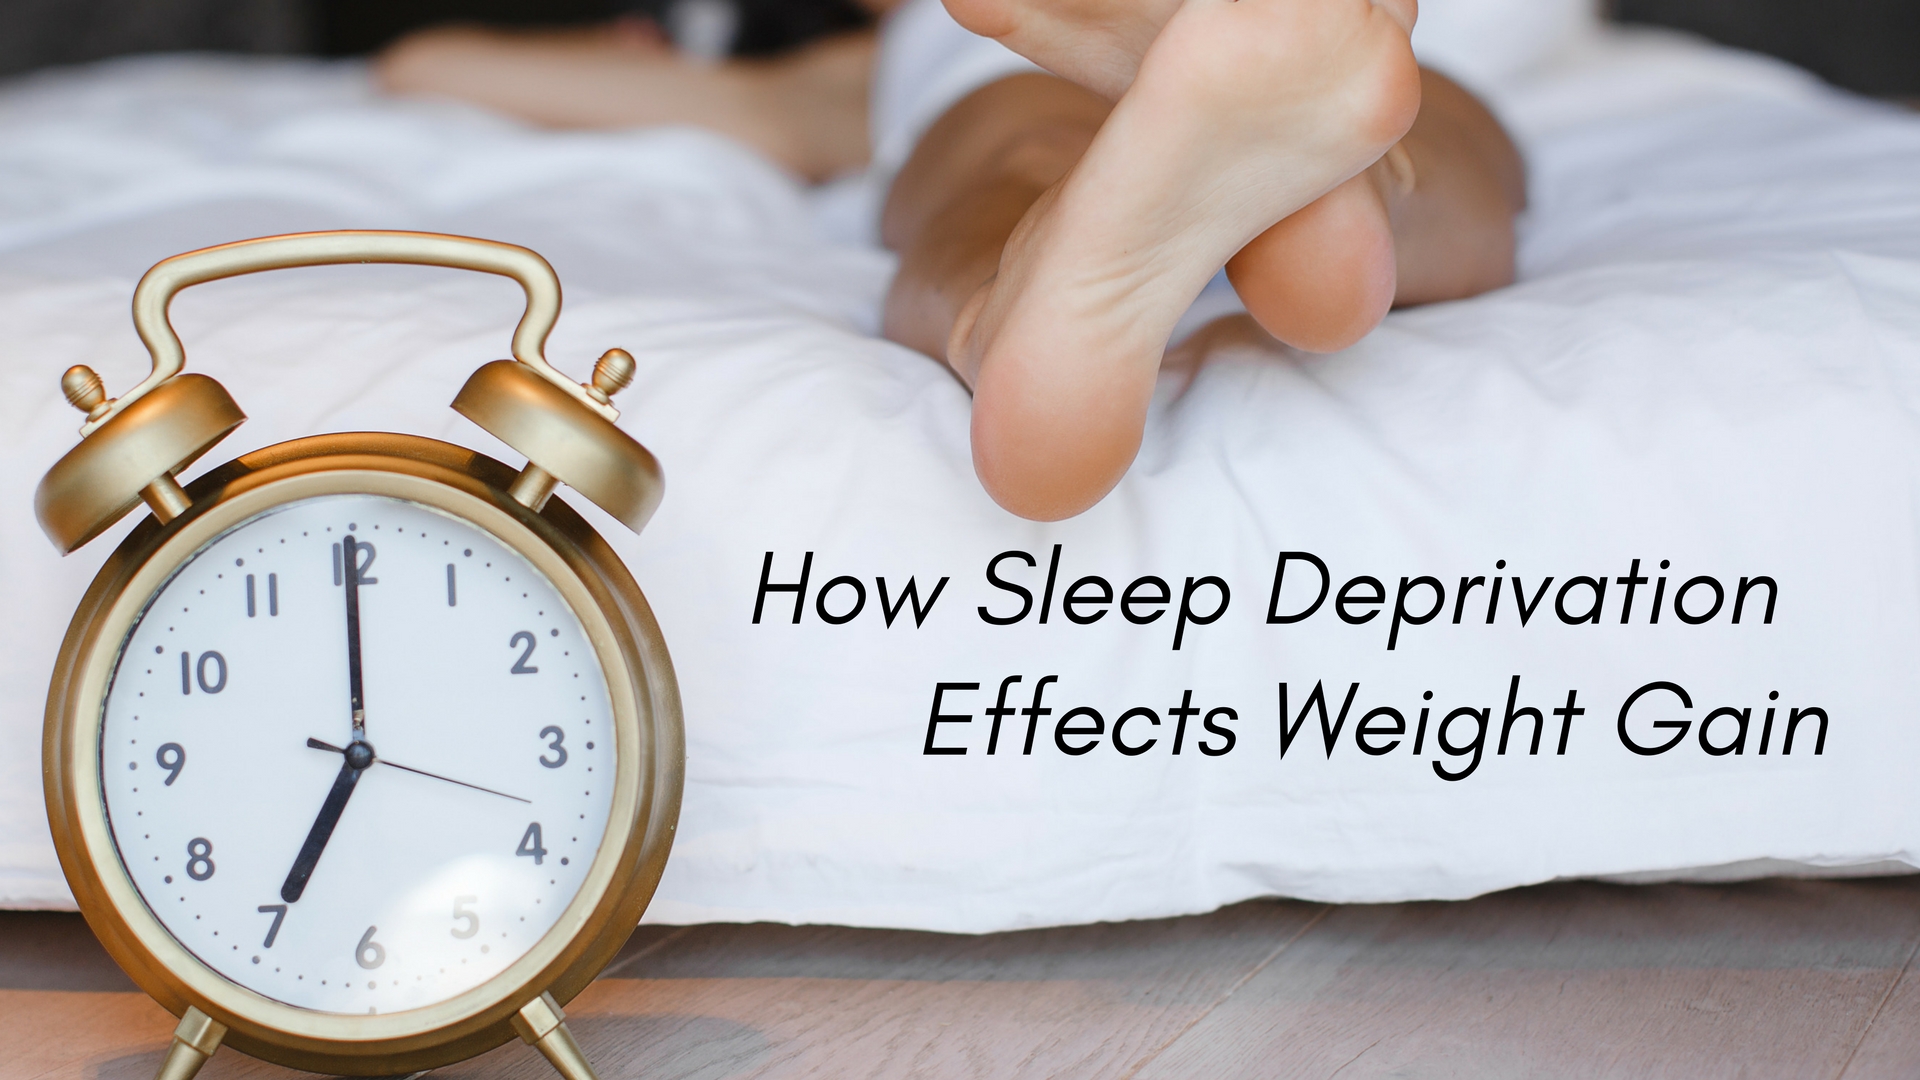 How Sleep Deprivation Affects Weight Gain